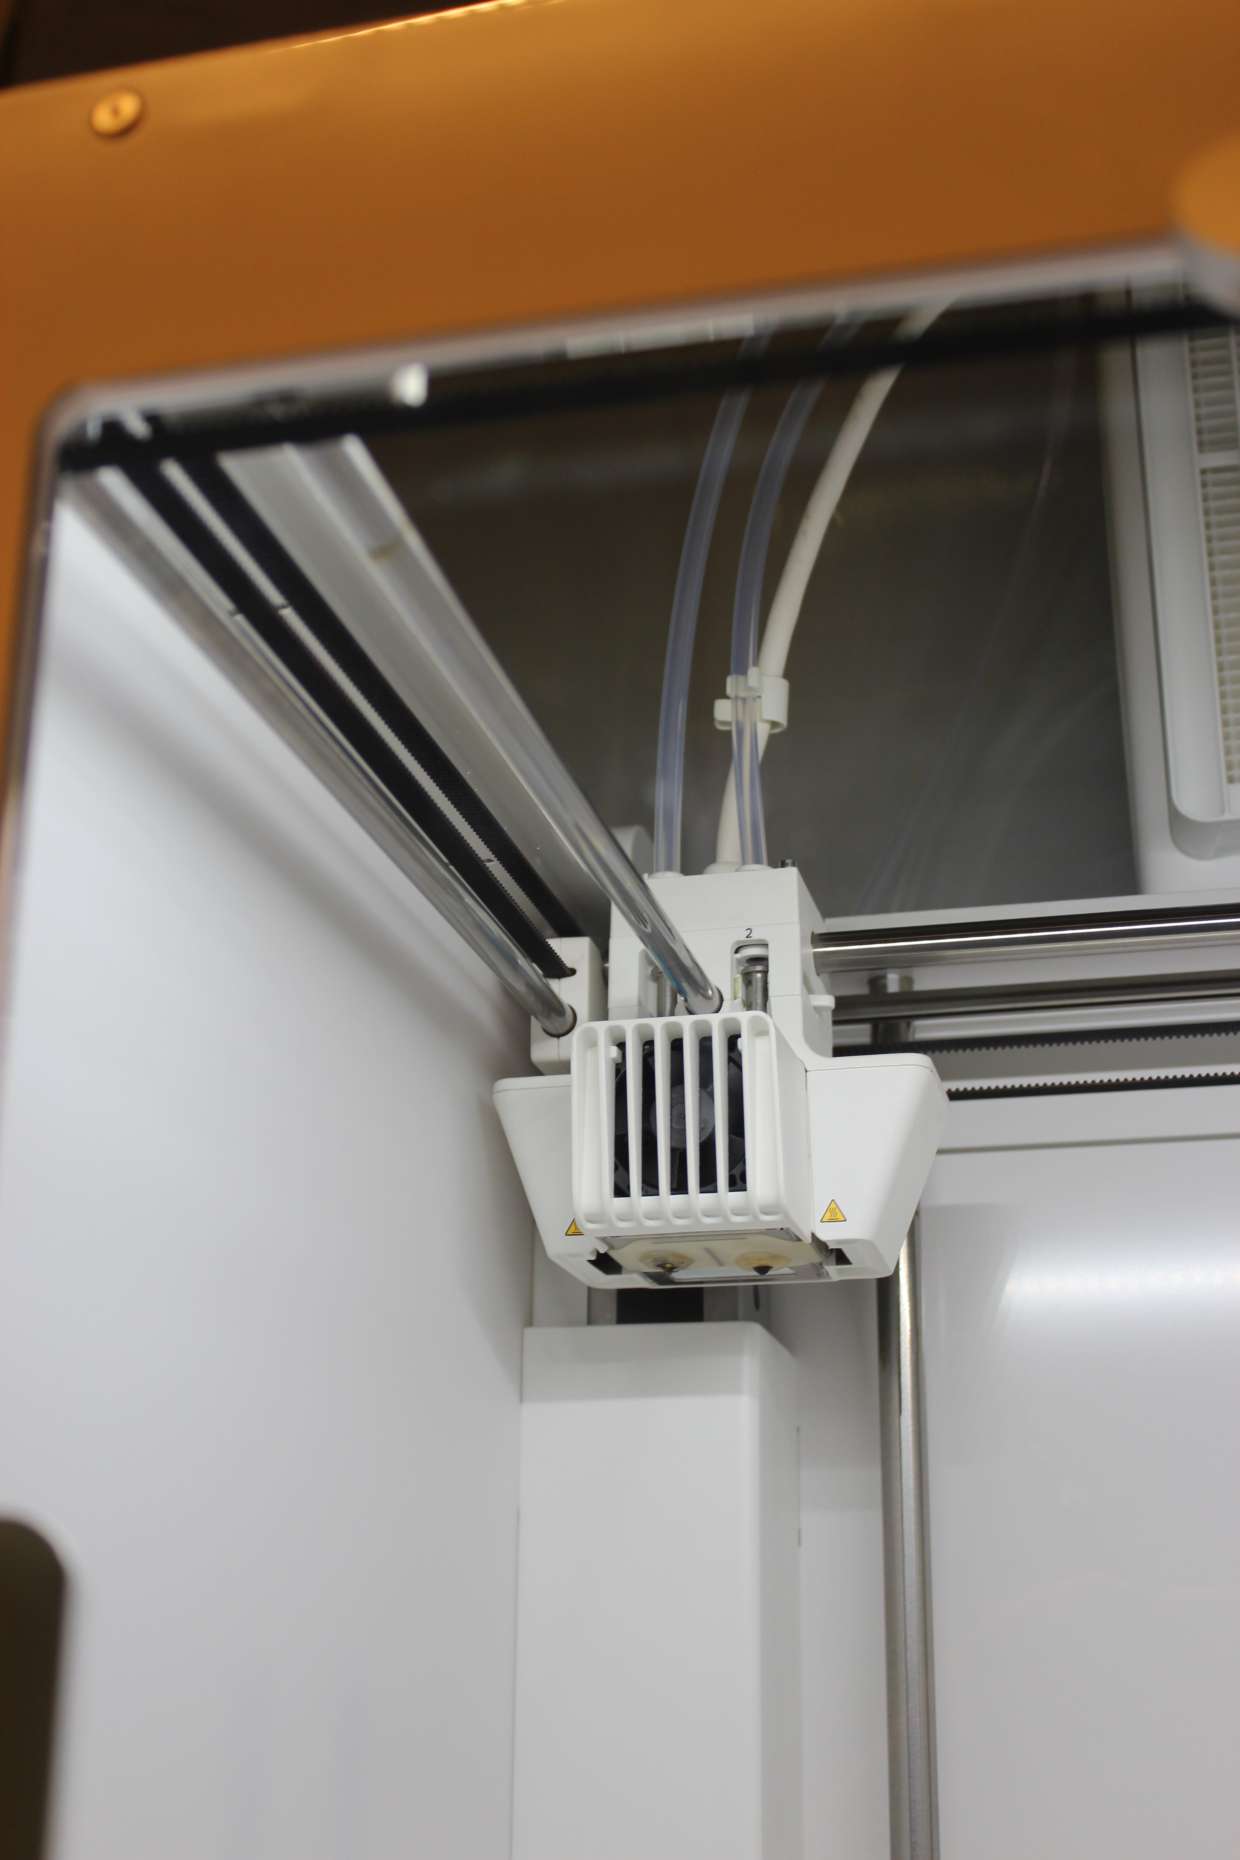 3D printer: UltiMaker S5 Pro